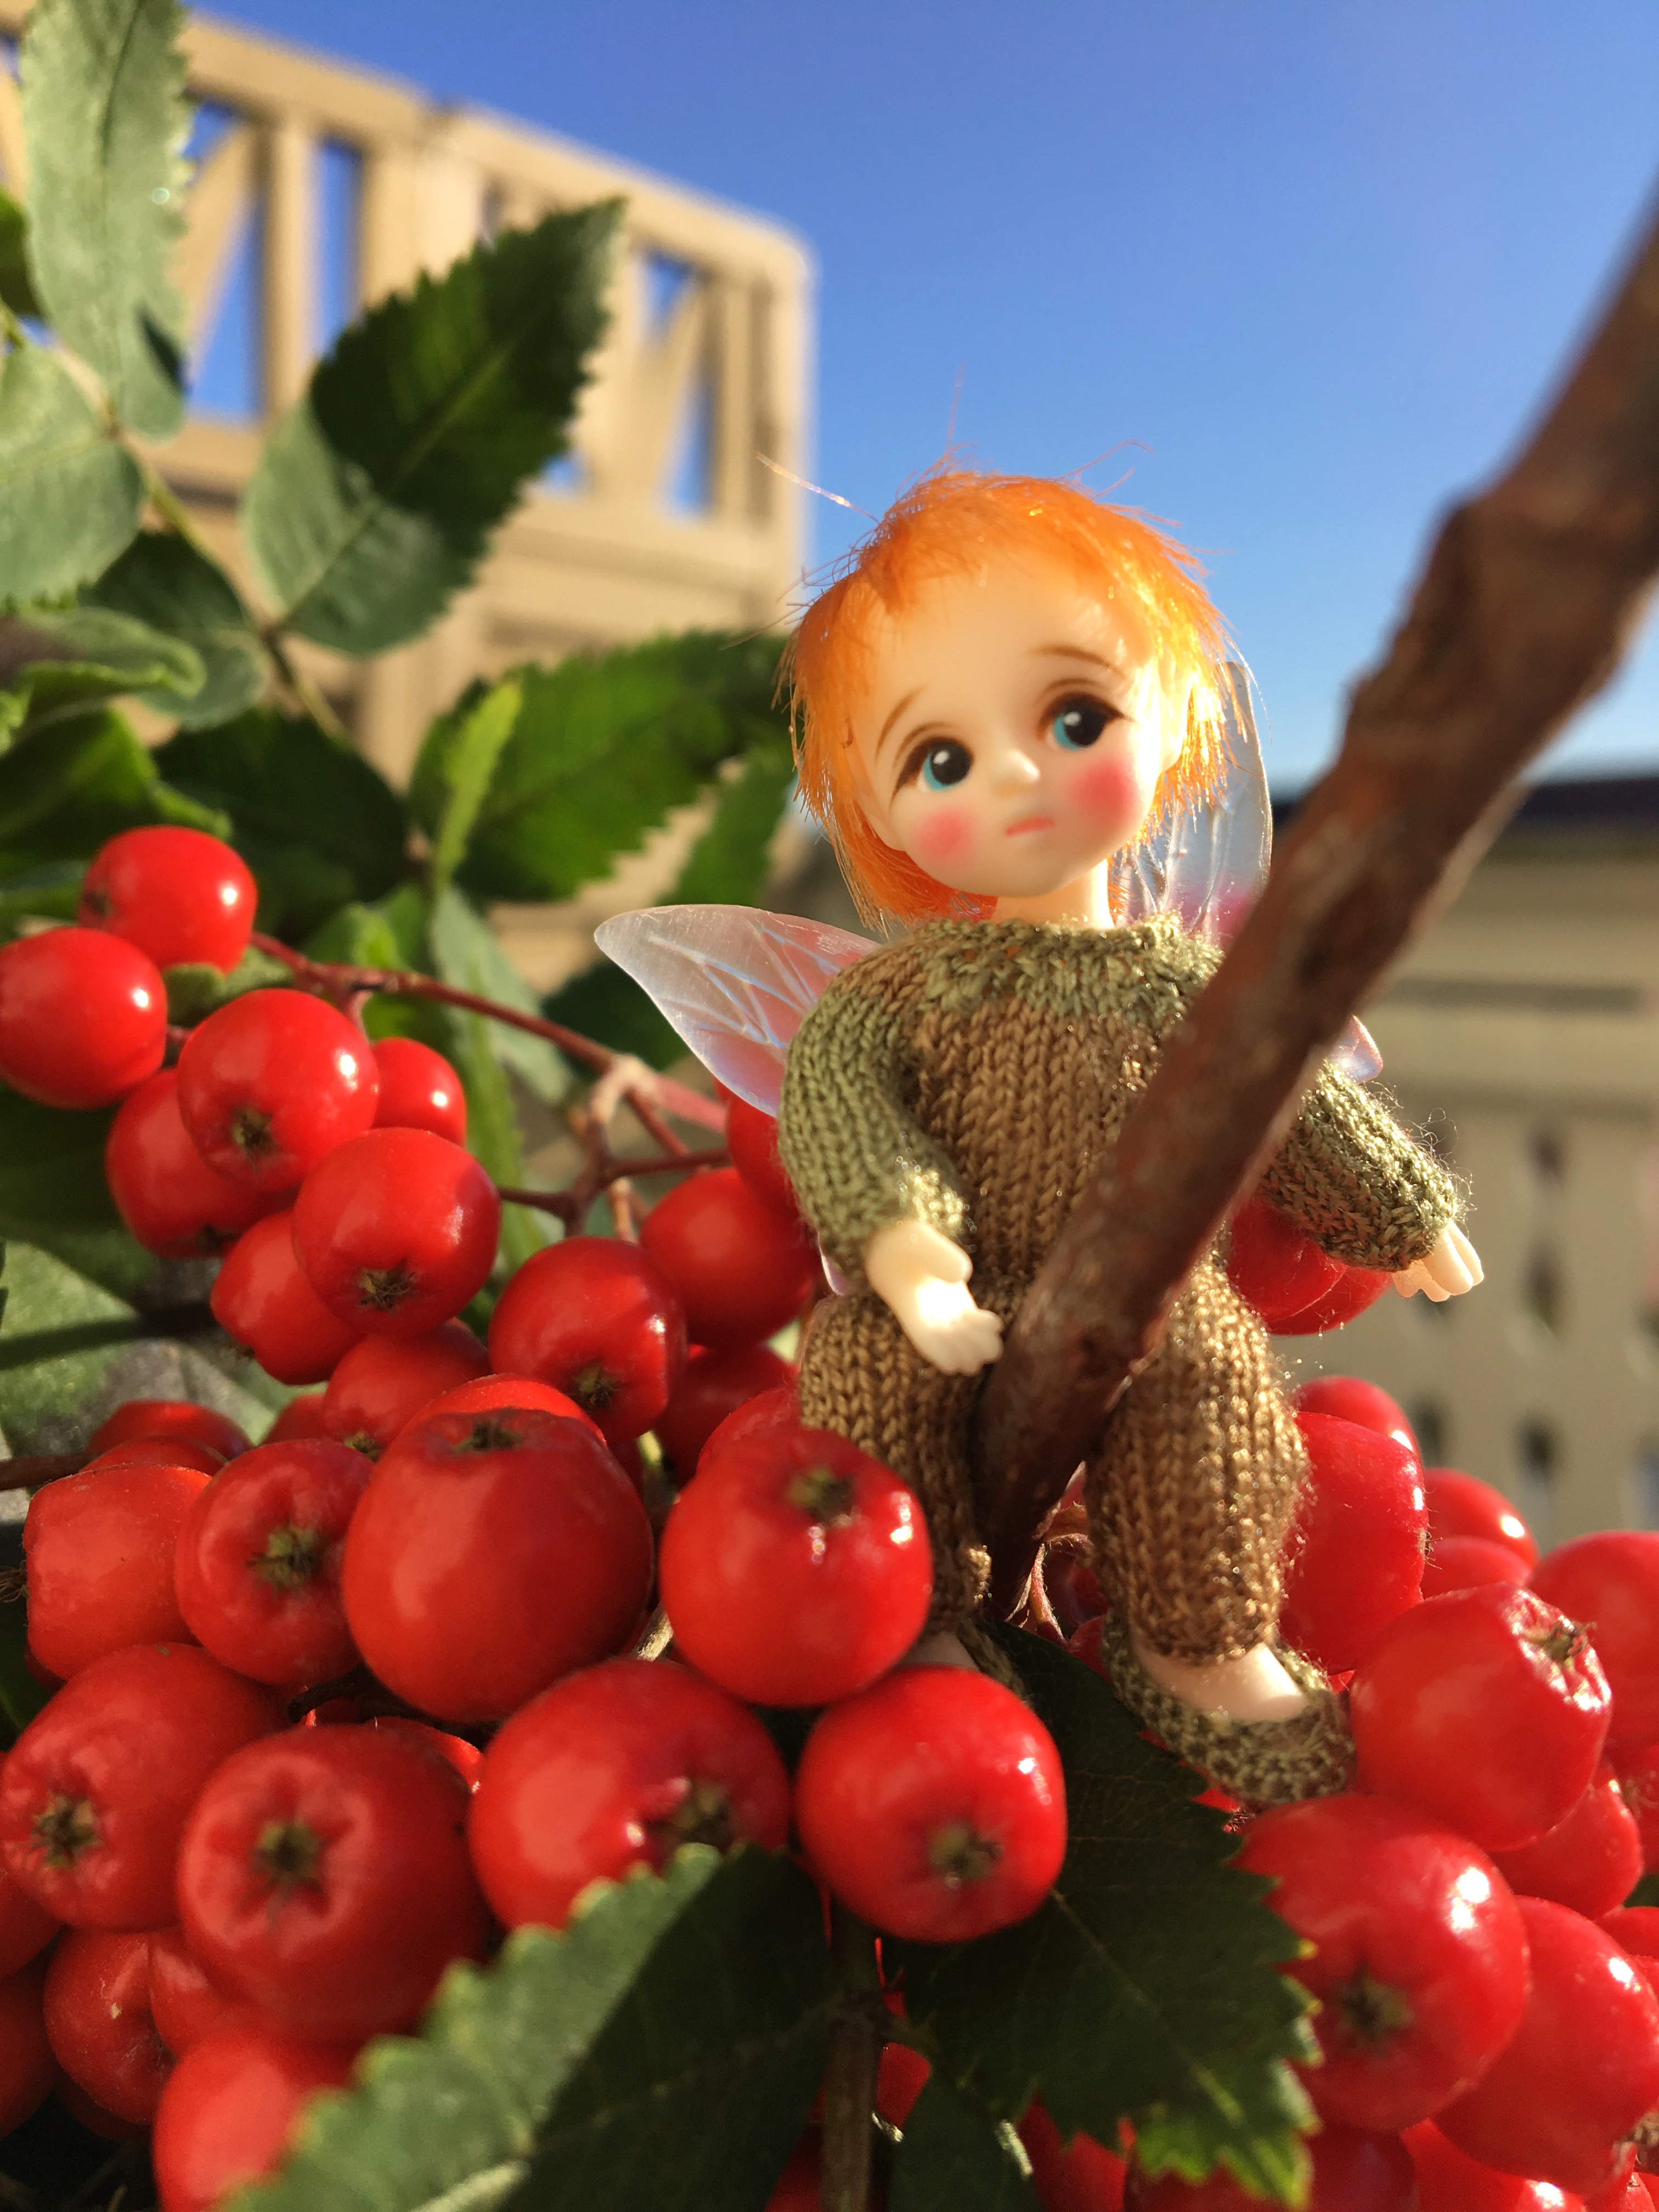 Pinky and the rowan berries